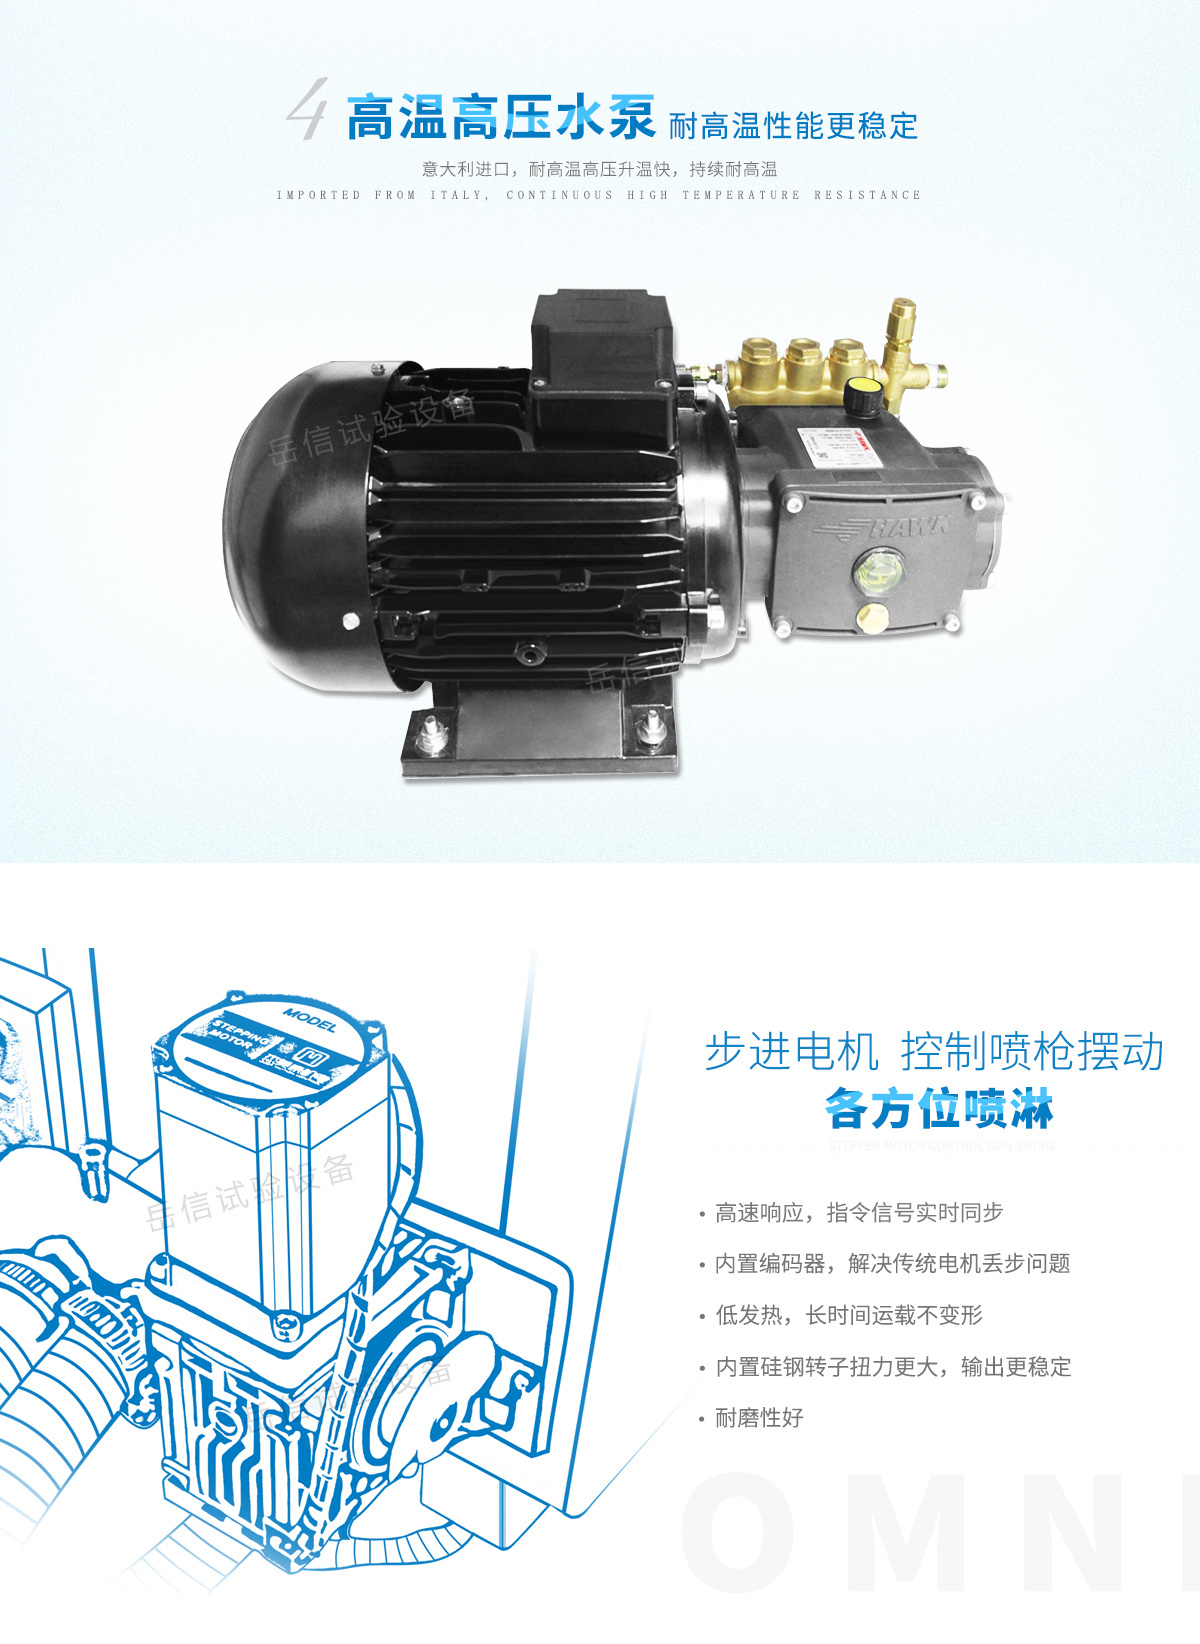 High temperature and high pressure water pump